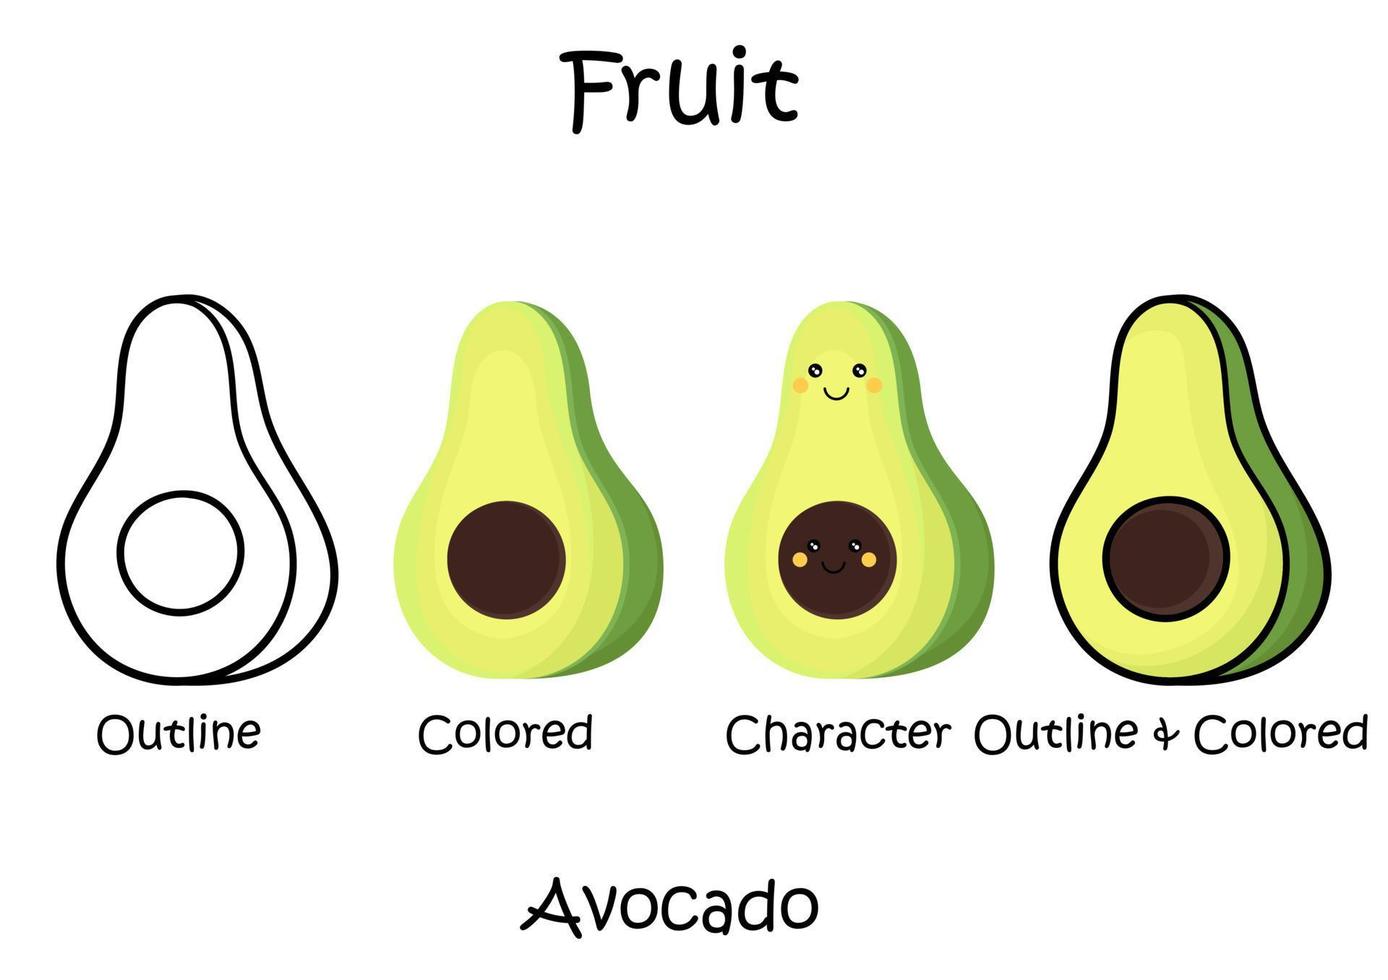 Sammlung von Avocado-Illustrationen vektor